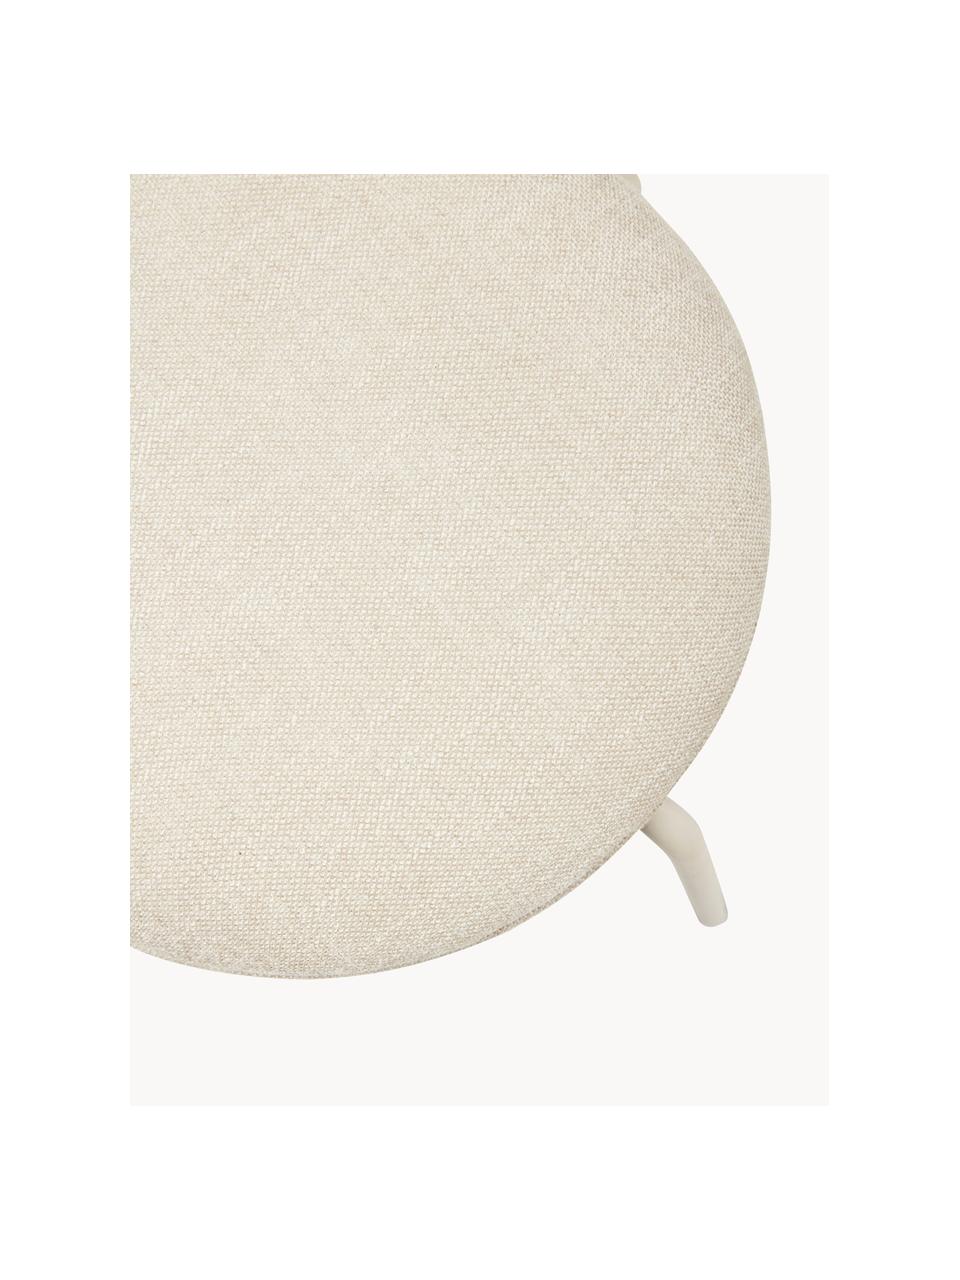 Kruk Stack, Bekleding: 100% polyester Met 40.000, Poten: gecoat metaal, Geweven stof crèmewit, crèmewit mat, Ø 35 x H 43 cm